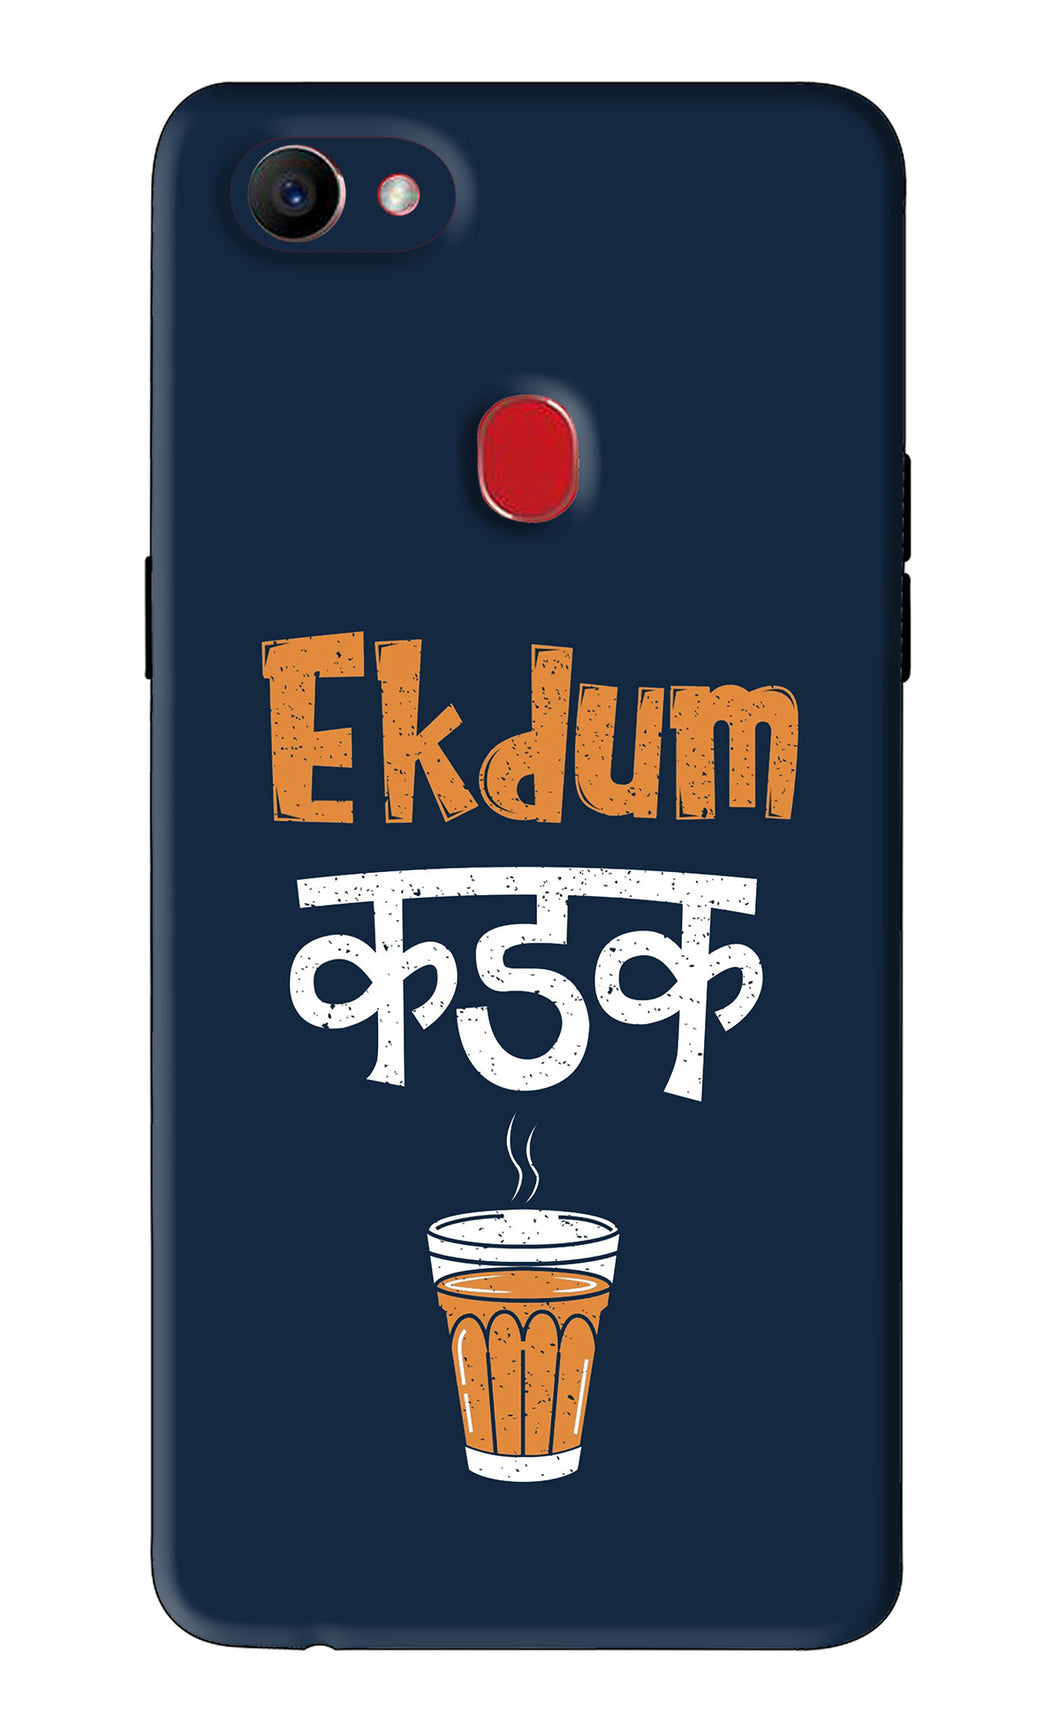 Ekdum Kadak Chai Oppo F7 Back Skin Wrap